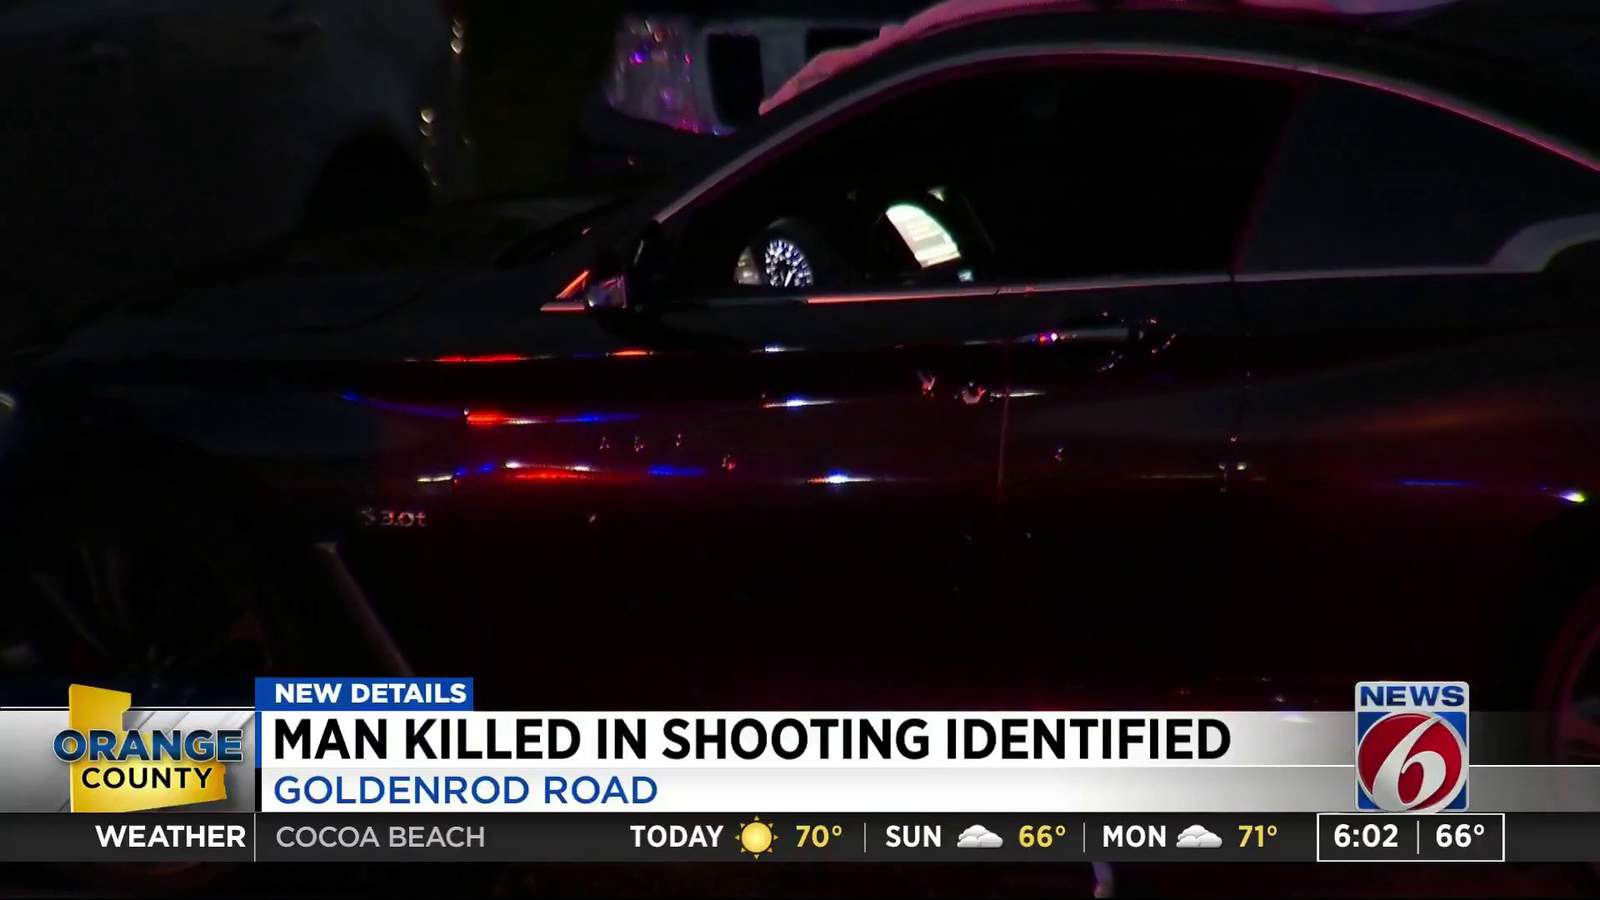 Man killed in shooting identified